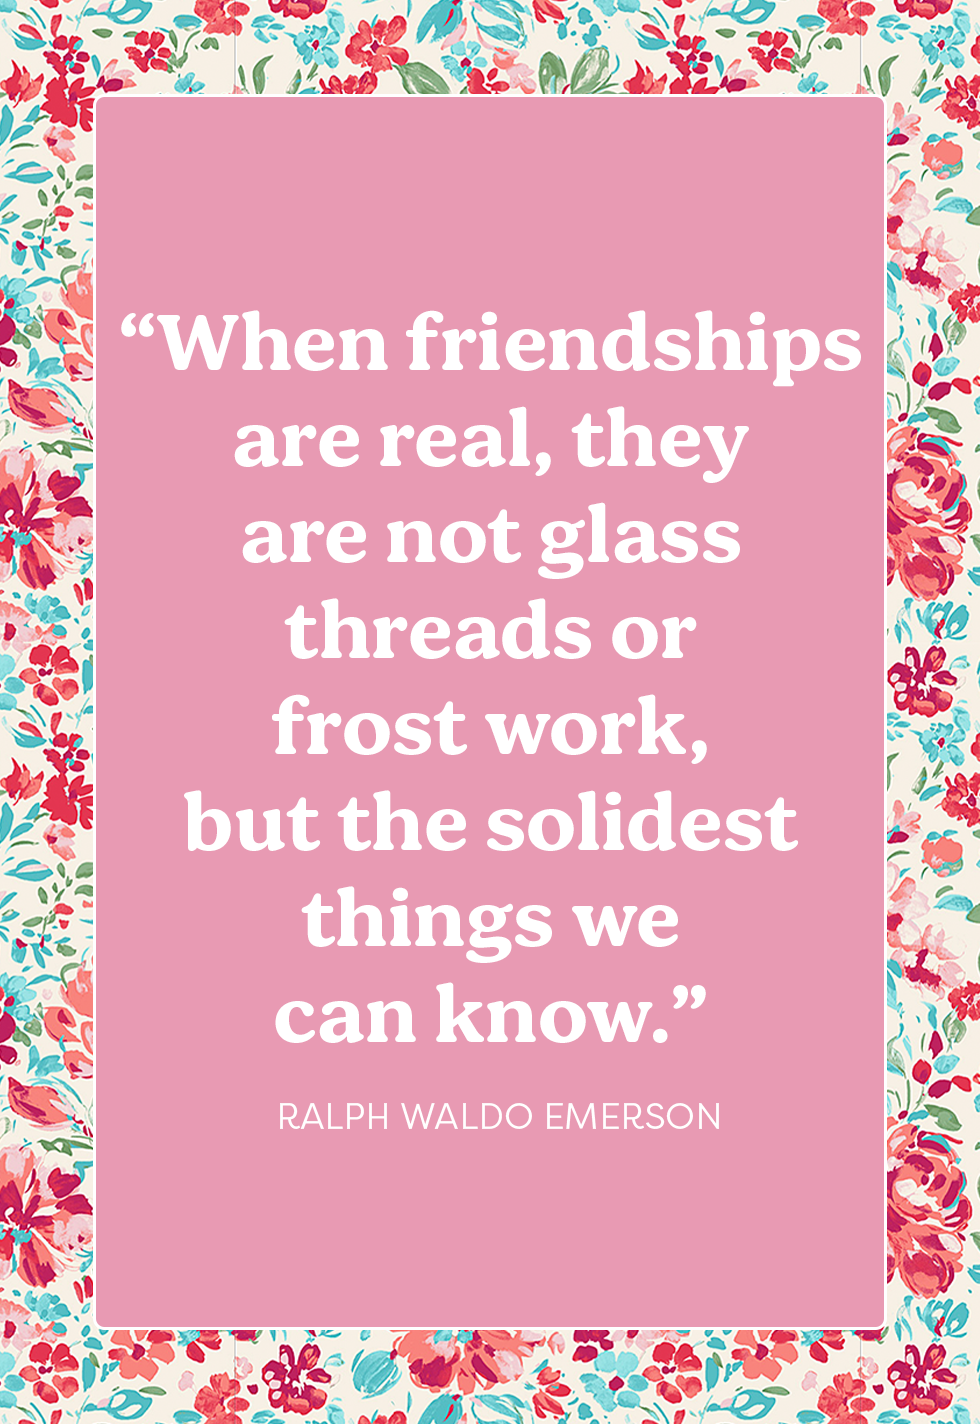 50 Best Friendship Quotes - Short Sayings About Best Friends